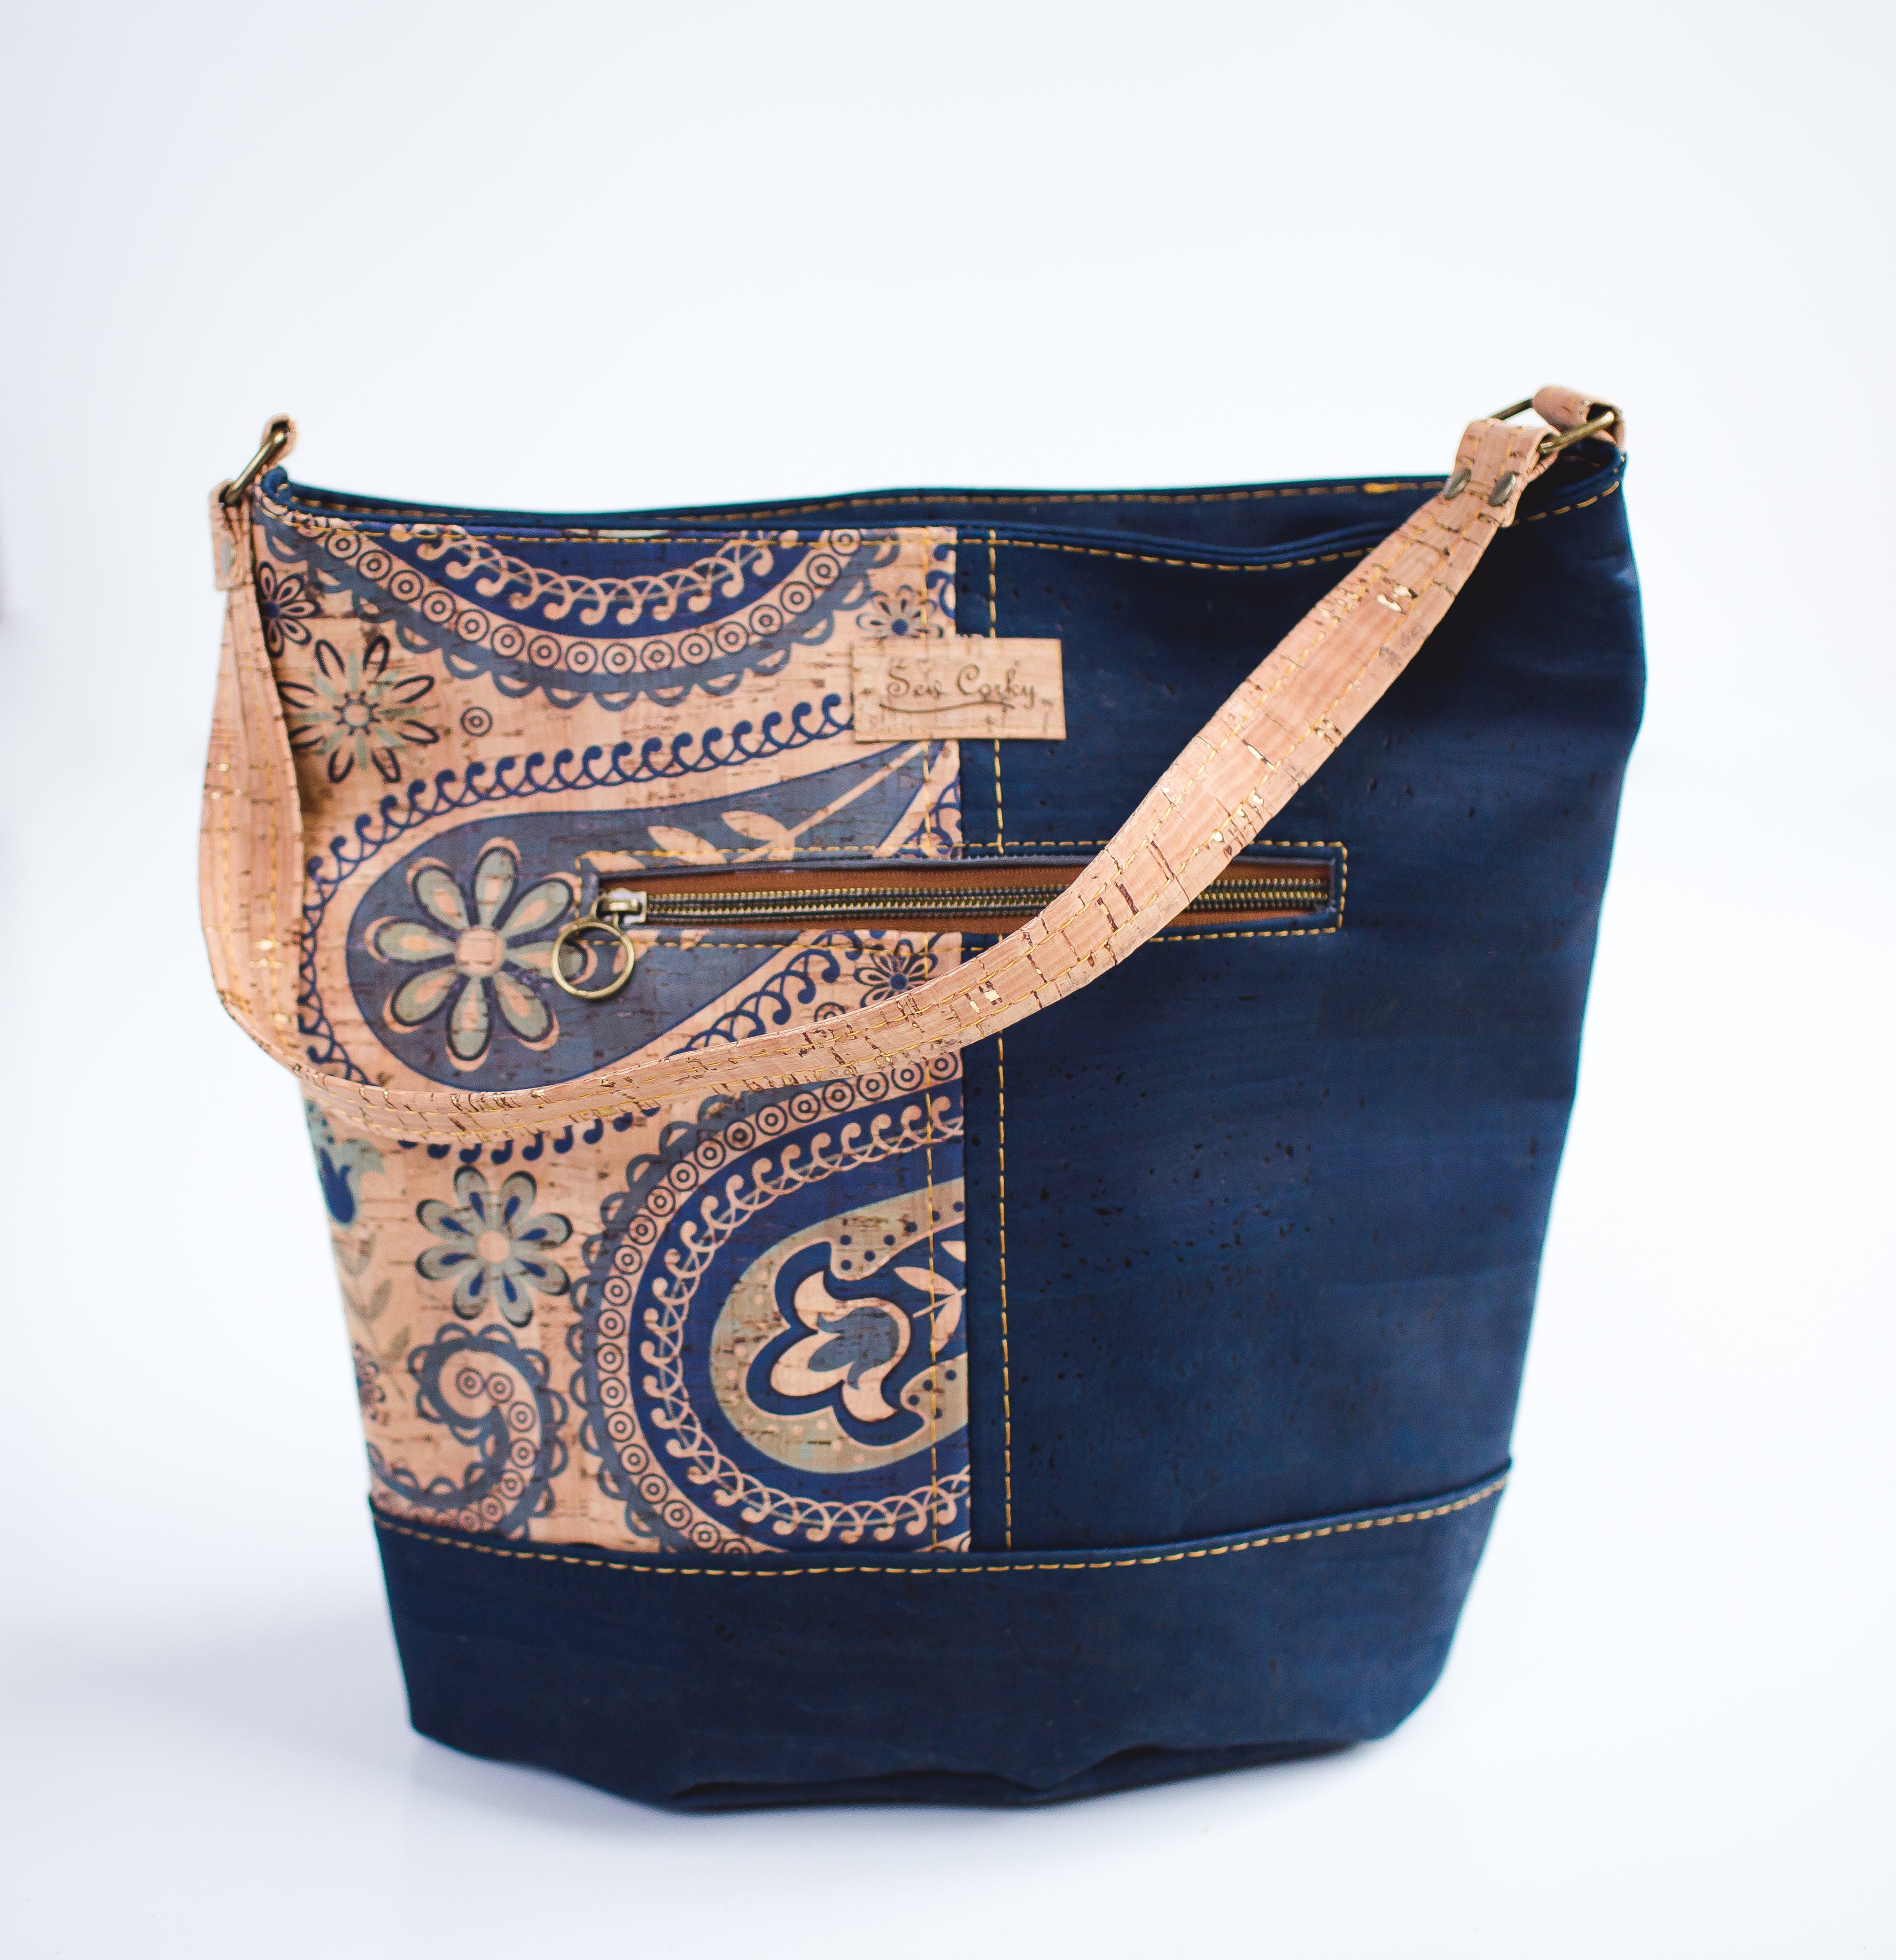 FF10-The Norah Bucket Handbag in Navy Blue and Paisley - All Cork Handbag